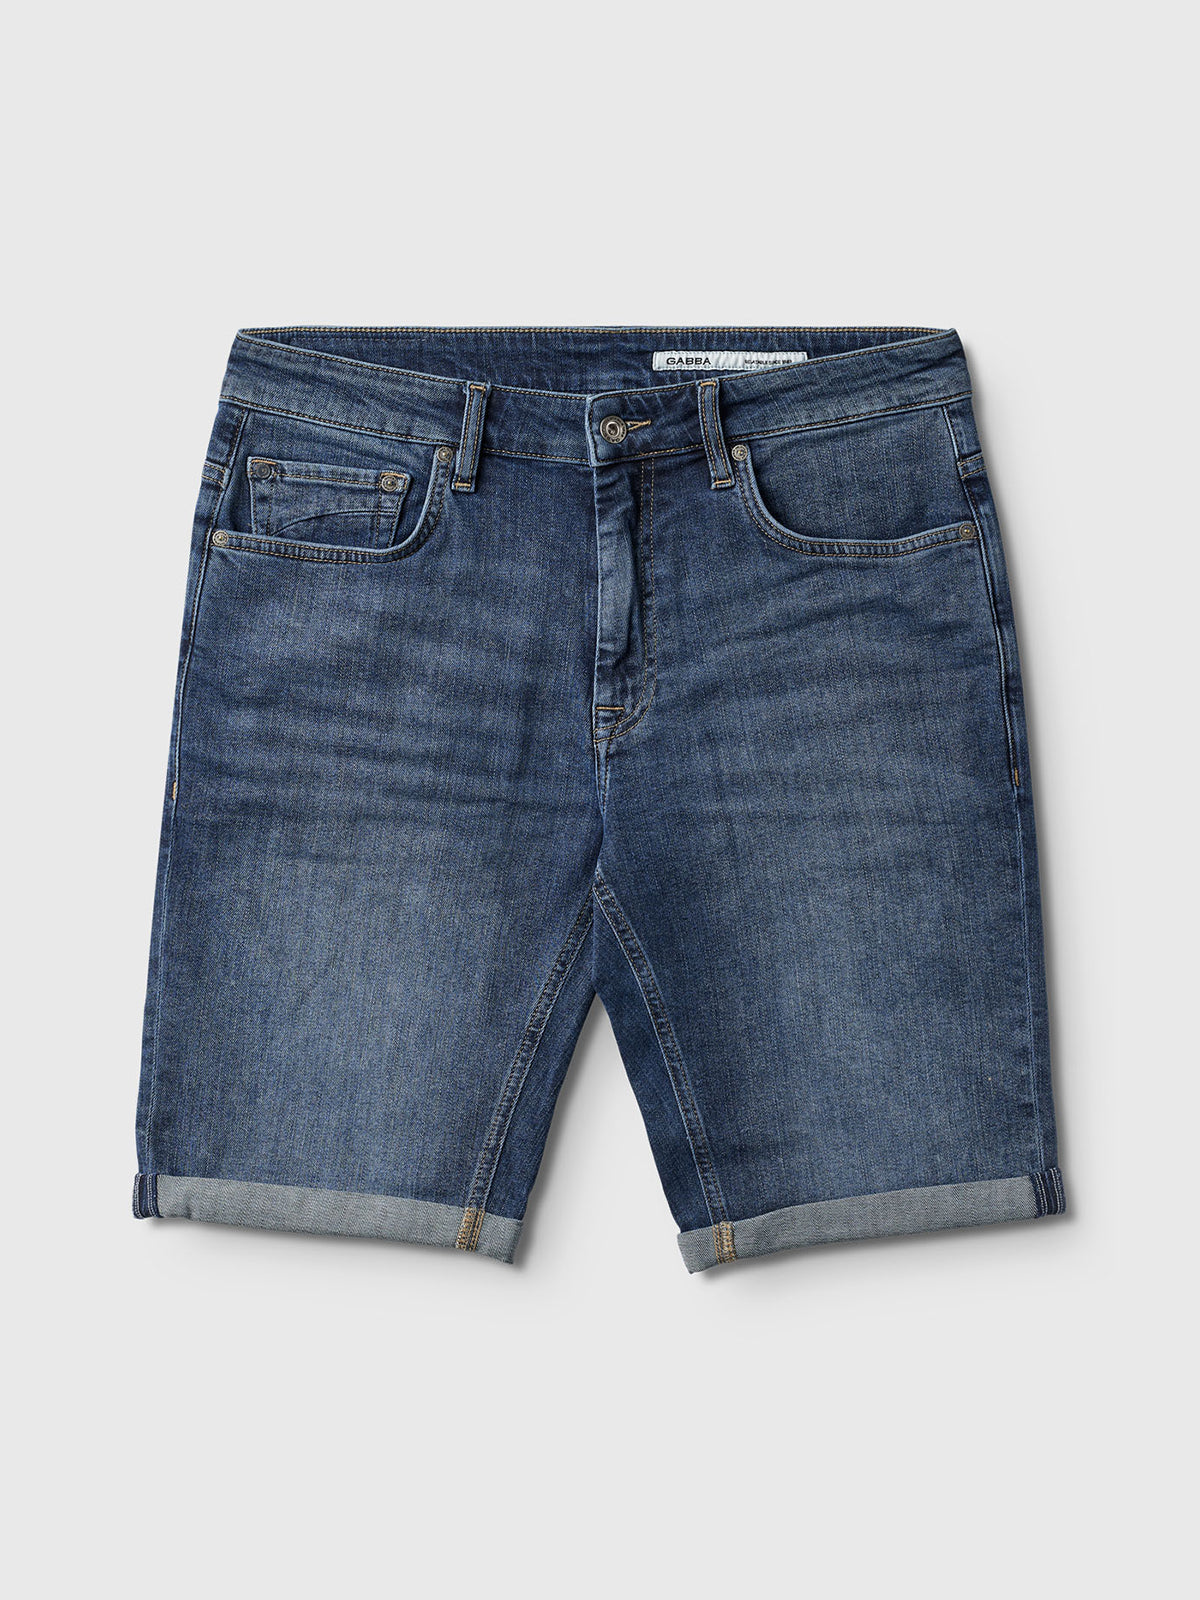 Markus K4664 Shorts - Mid Blue Denim